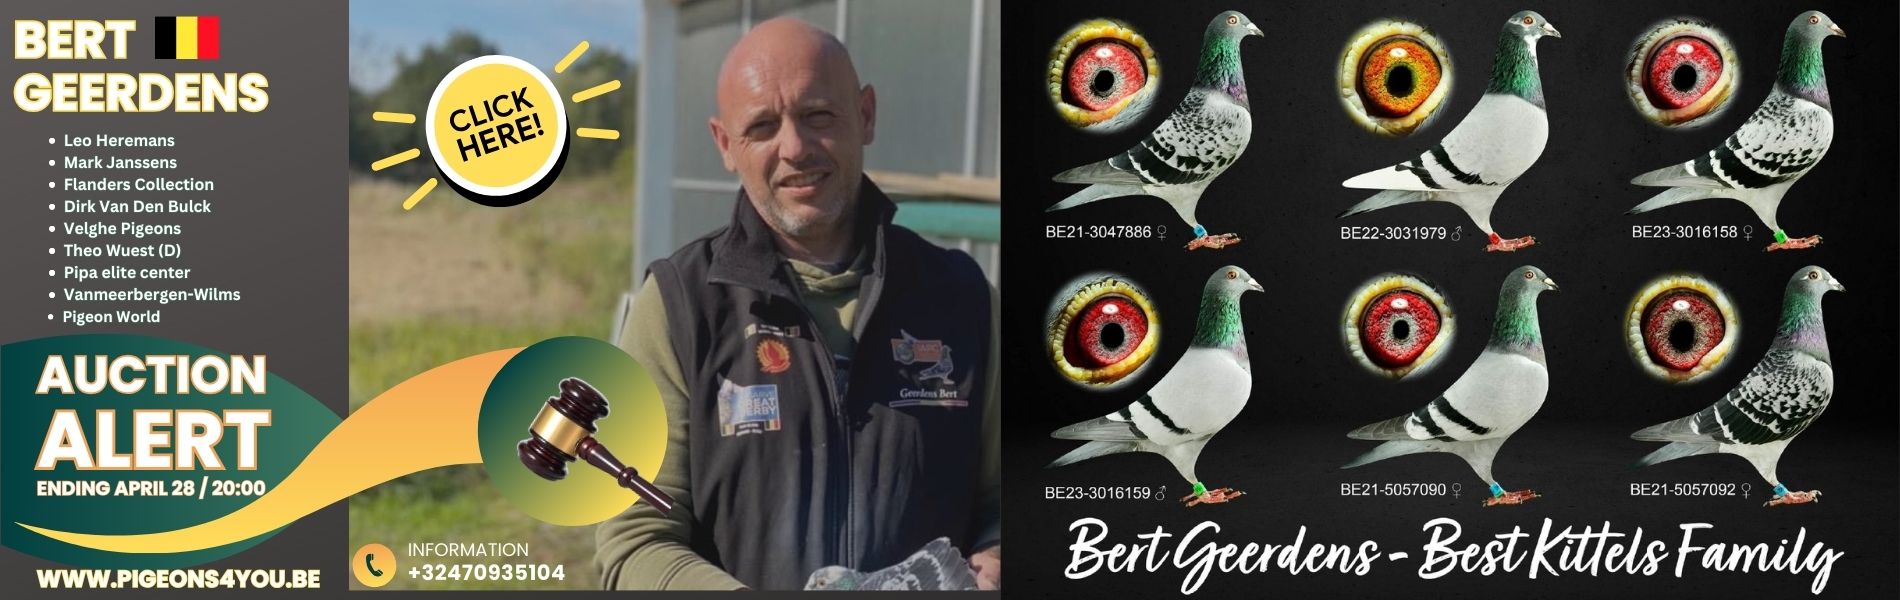 Auction Alert, Bert Geerdens is seilling some great racing pigeons